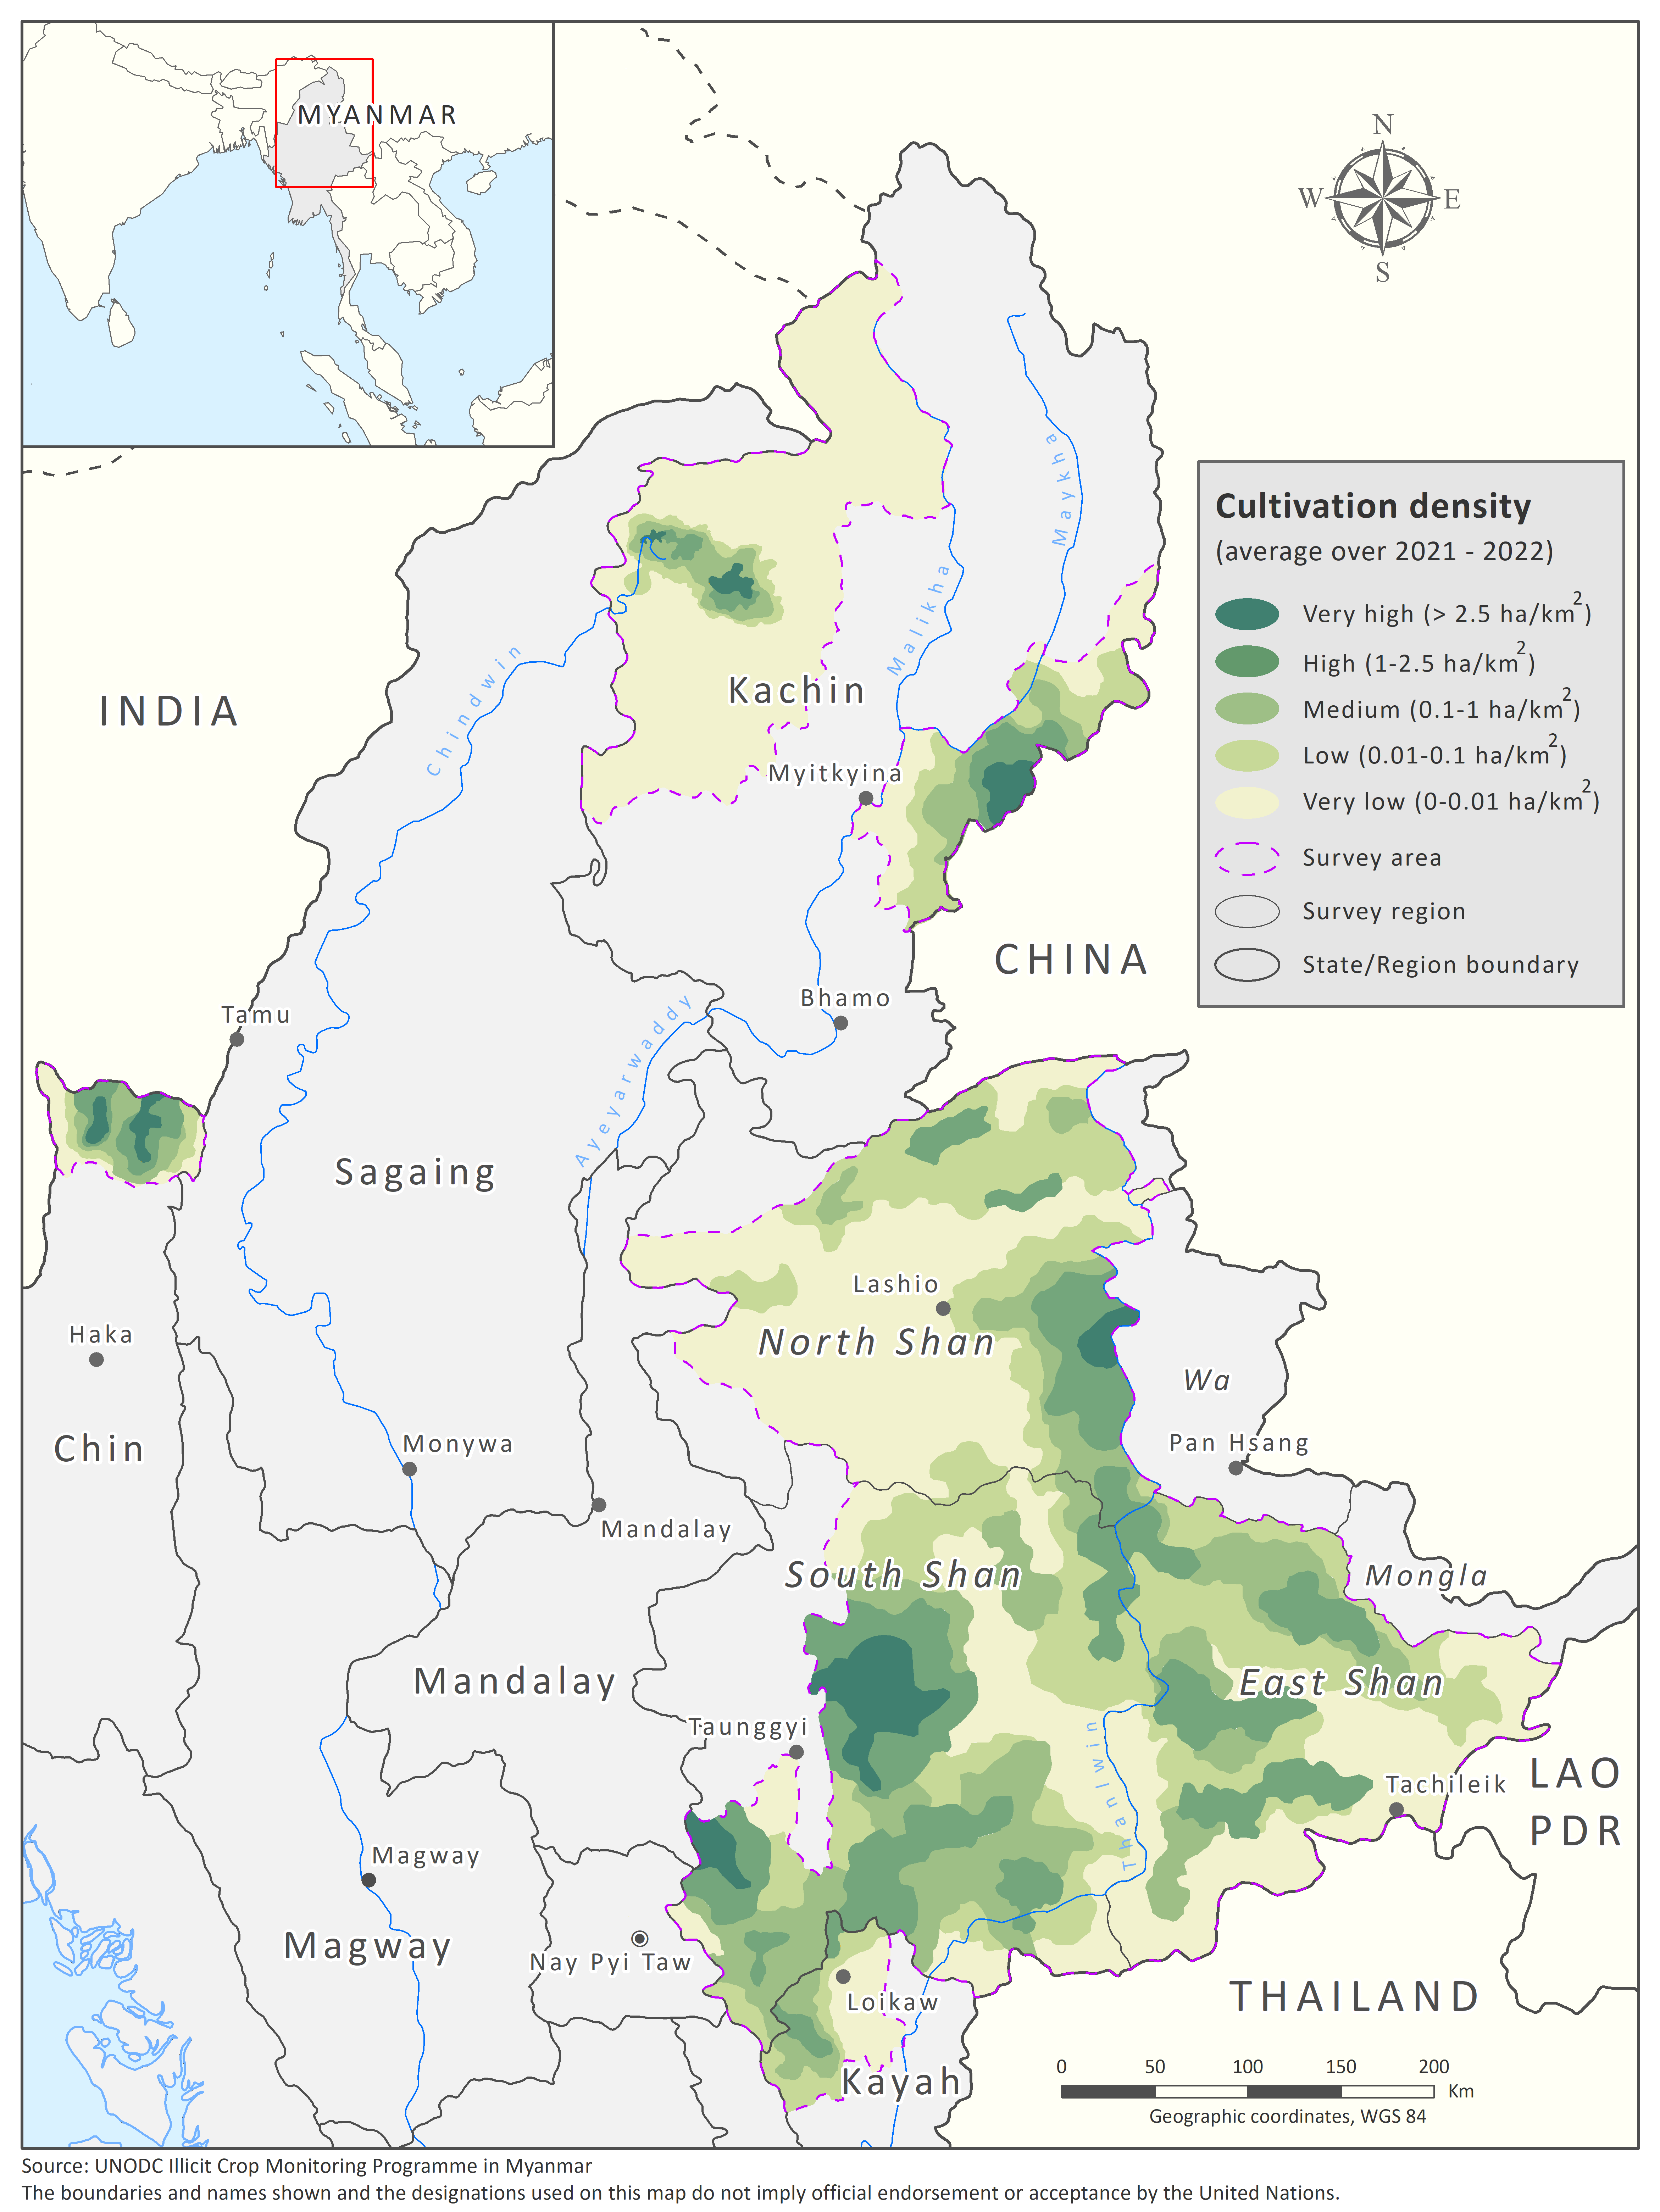 Opium poppy cultivation density in Myanmar